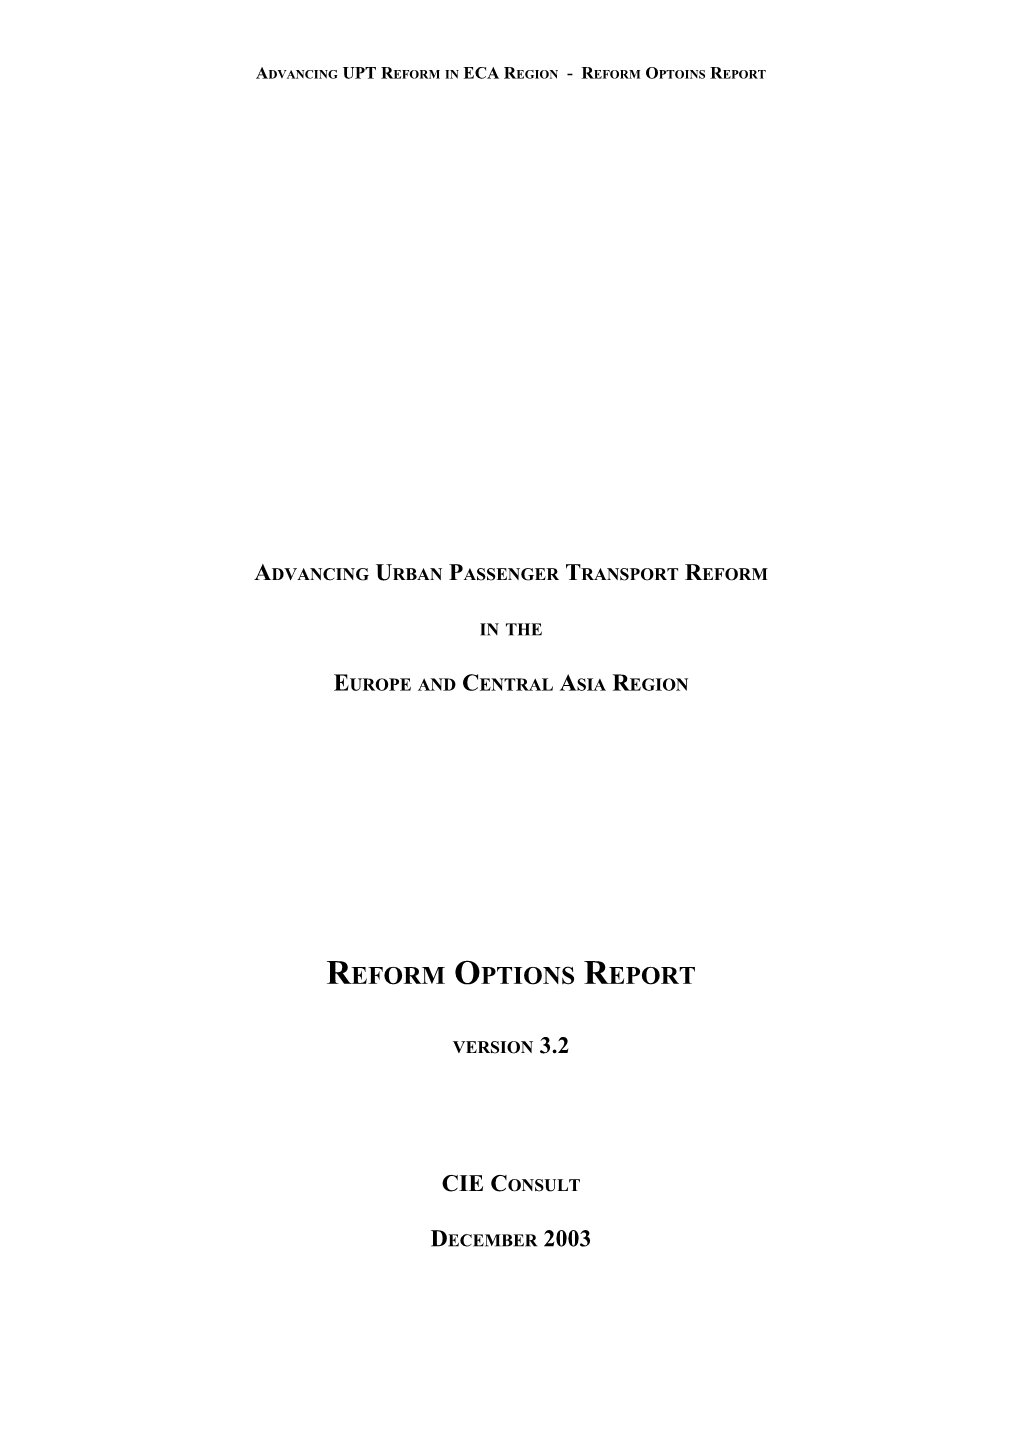 Reform Options Report